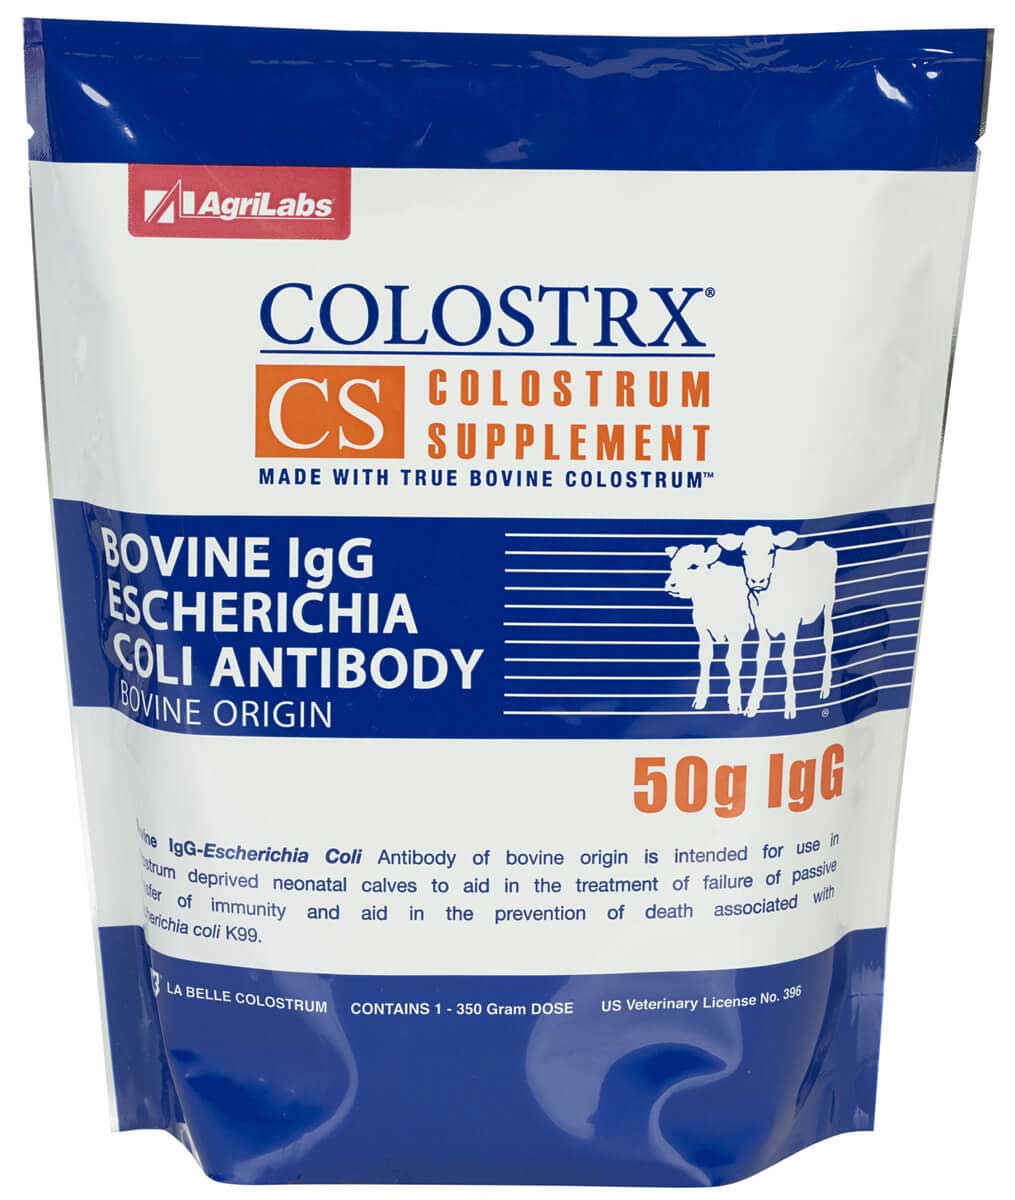 Colostrx CS Bovine Colostrum Supplement